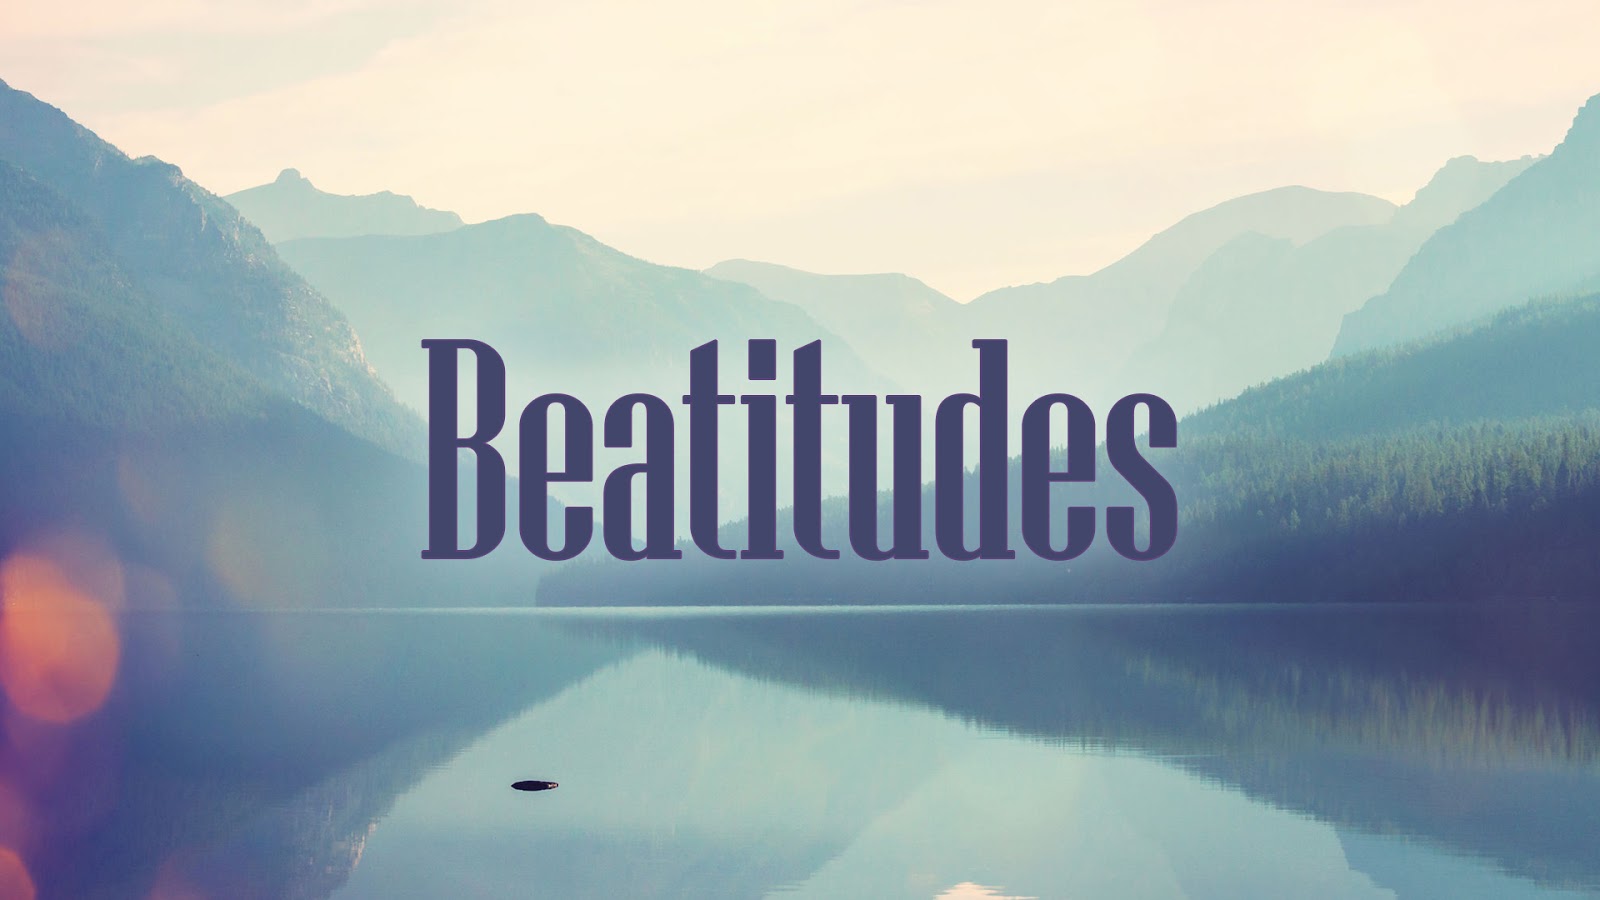 the beatitudes wallpaper